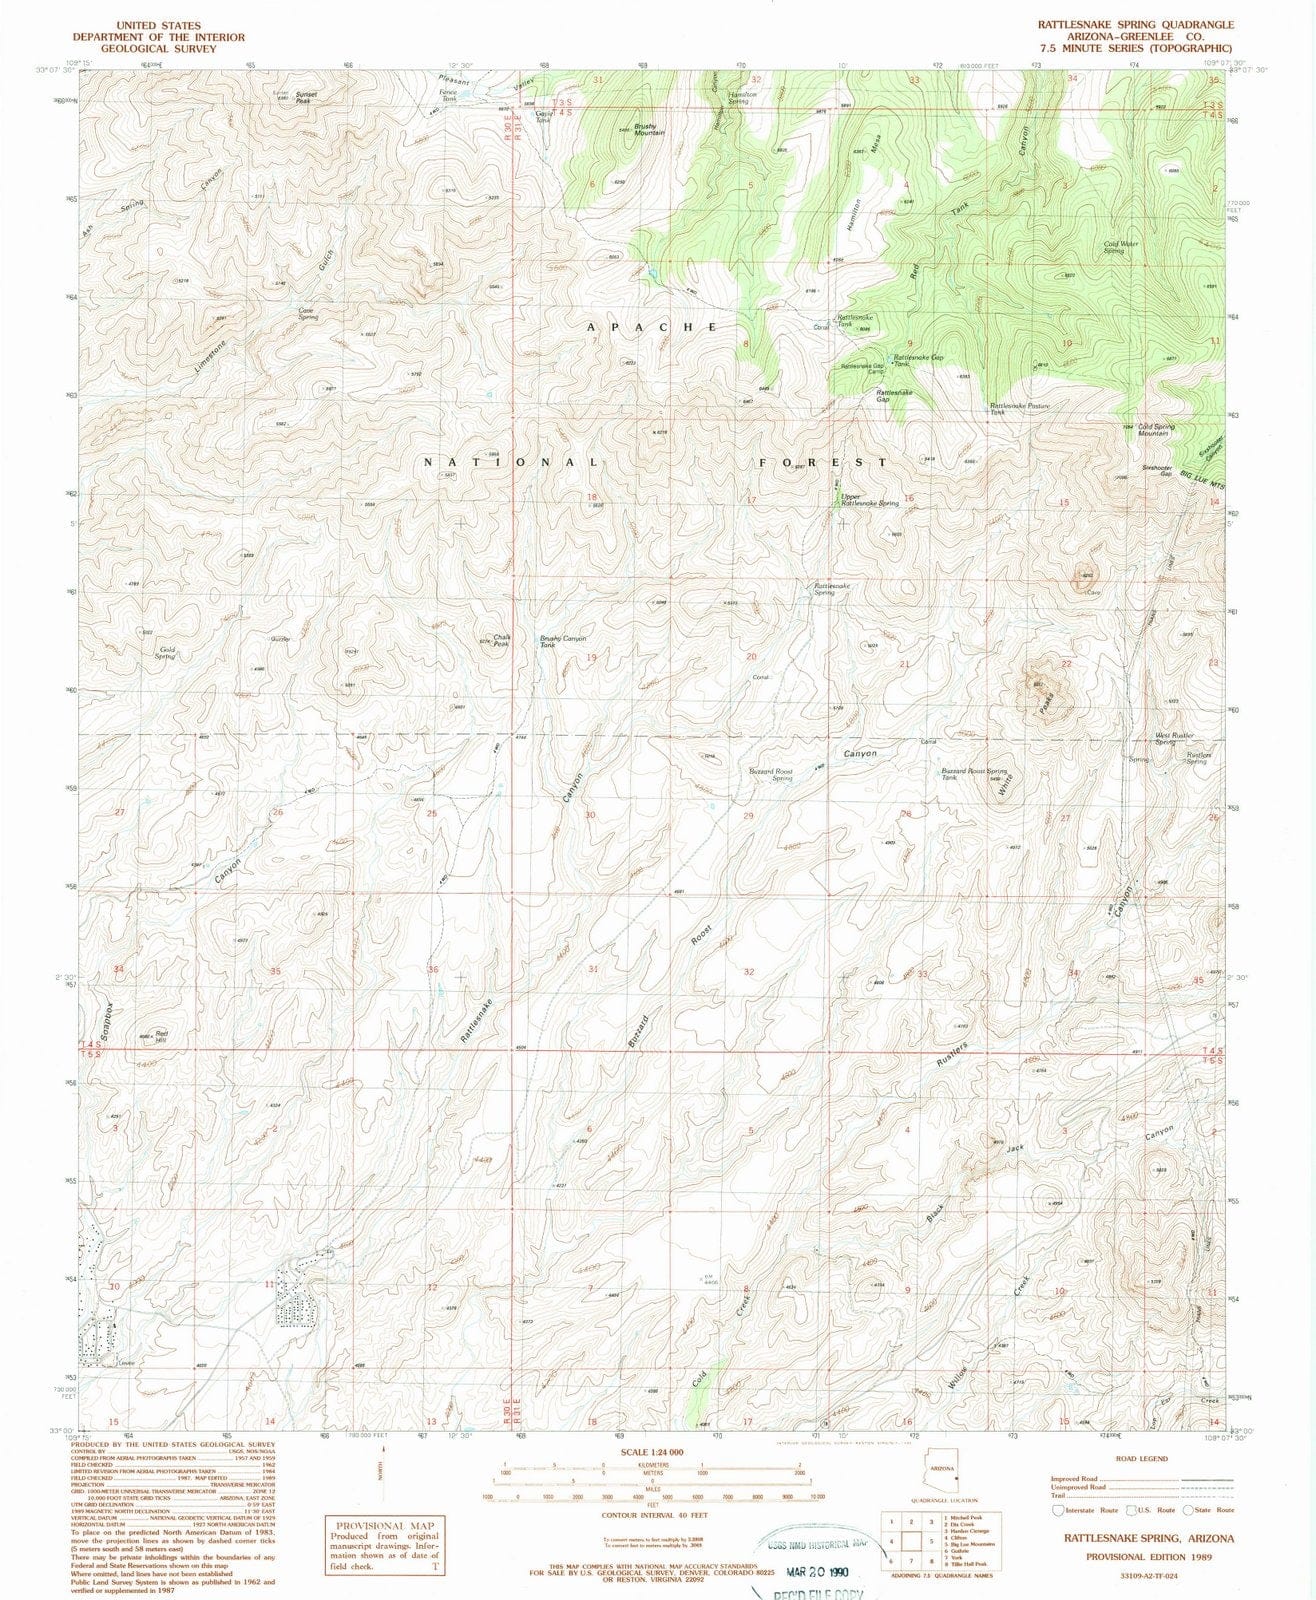 1989 Rattlesnake Spring, AZ - Arizona - USGS Topographic Map